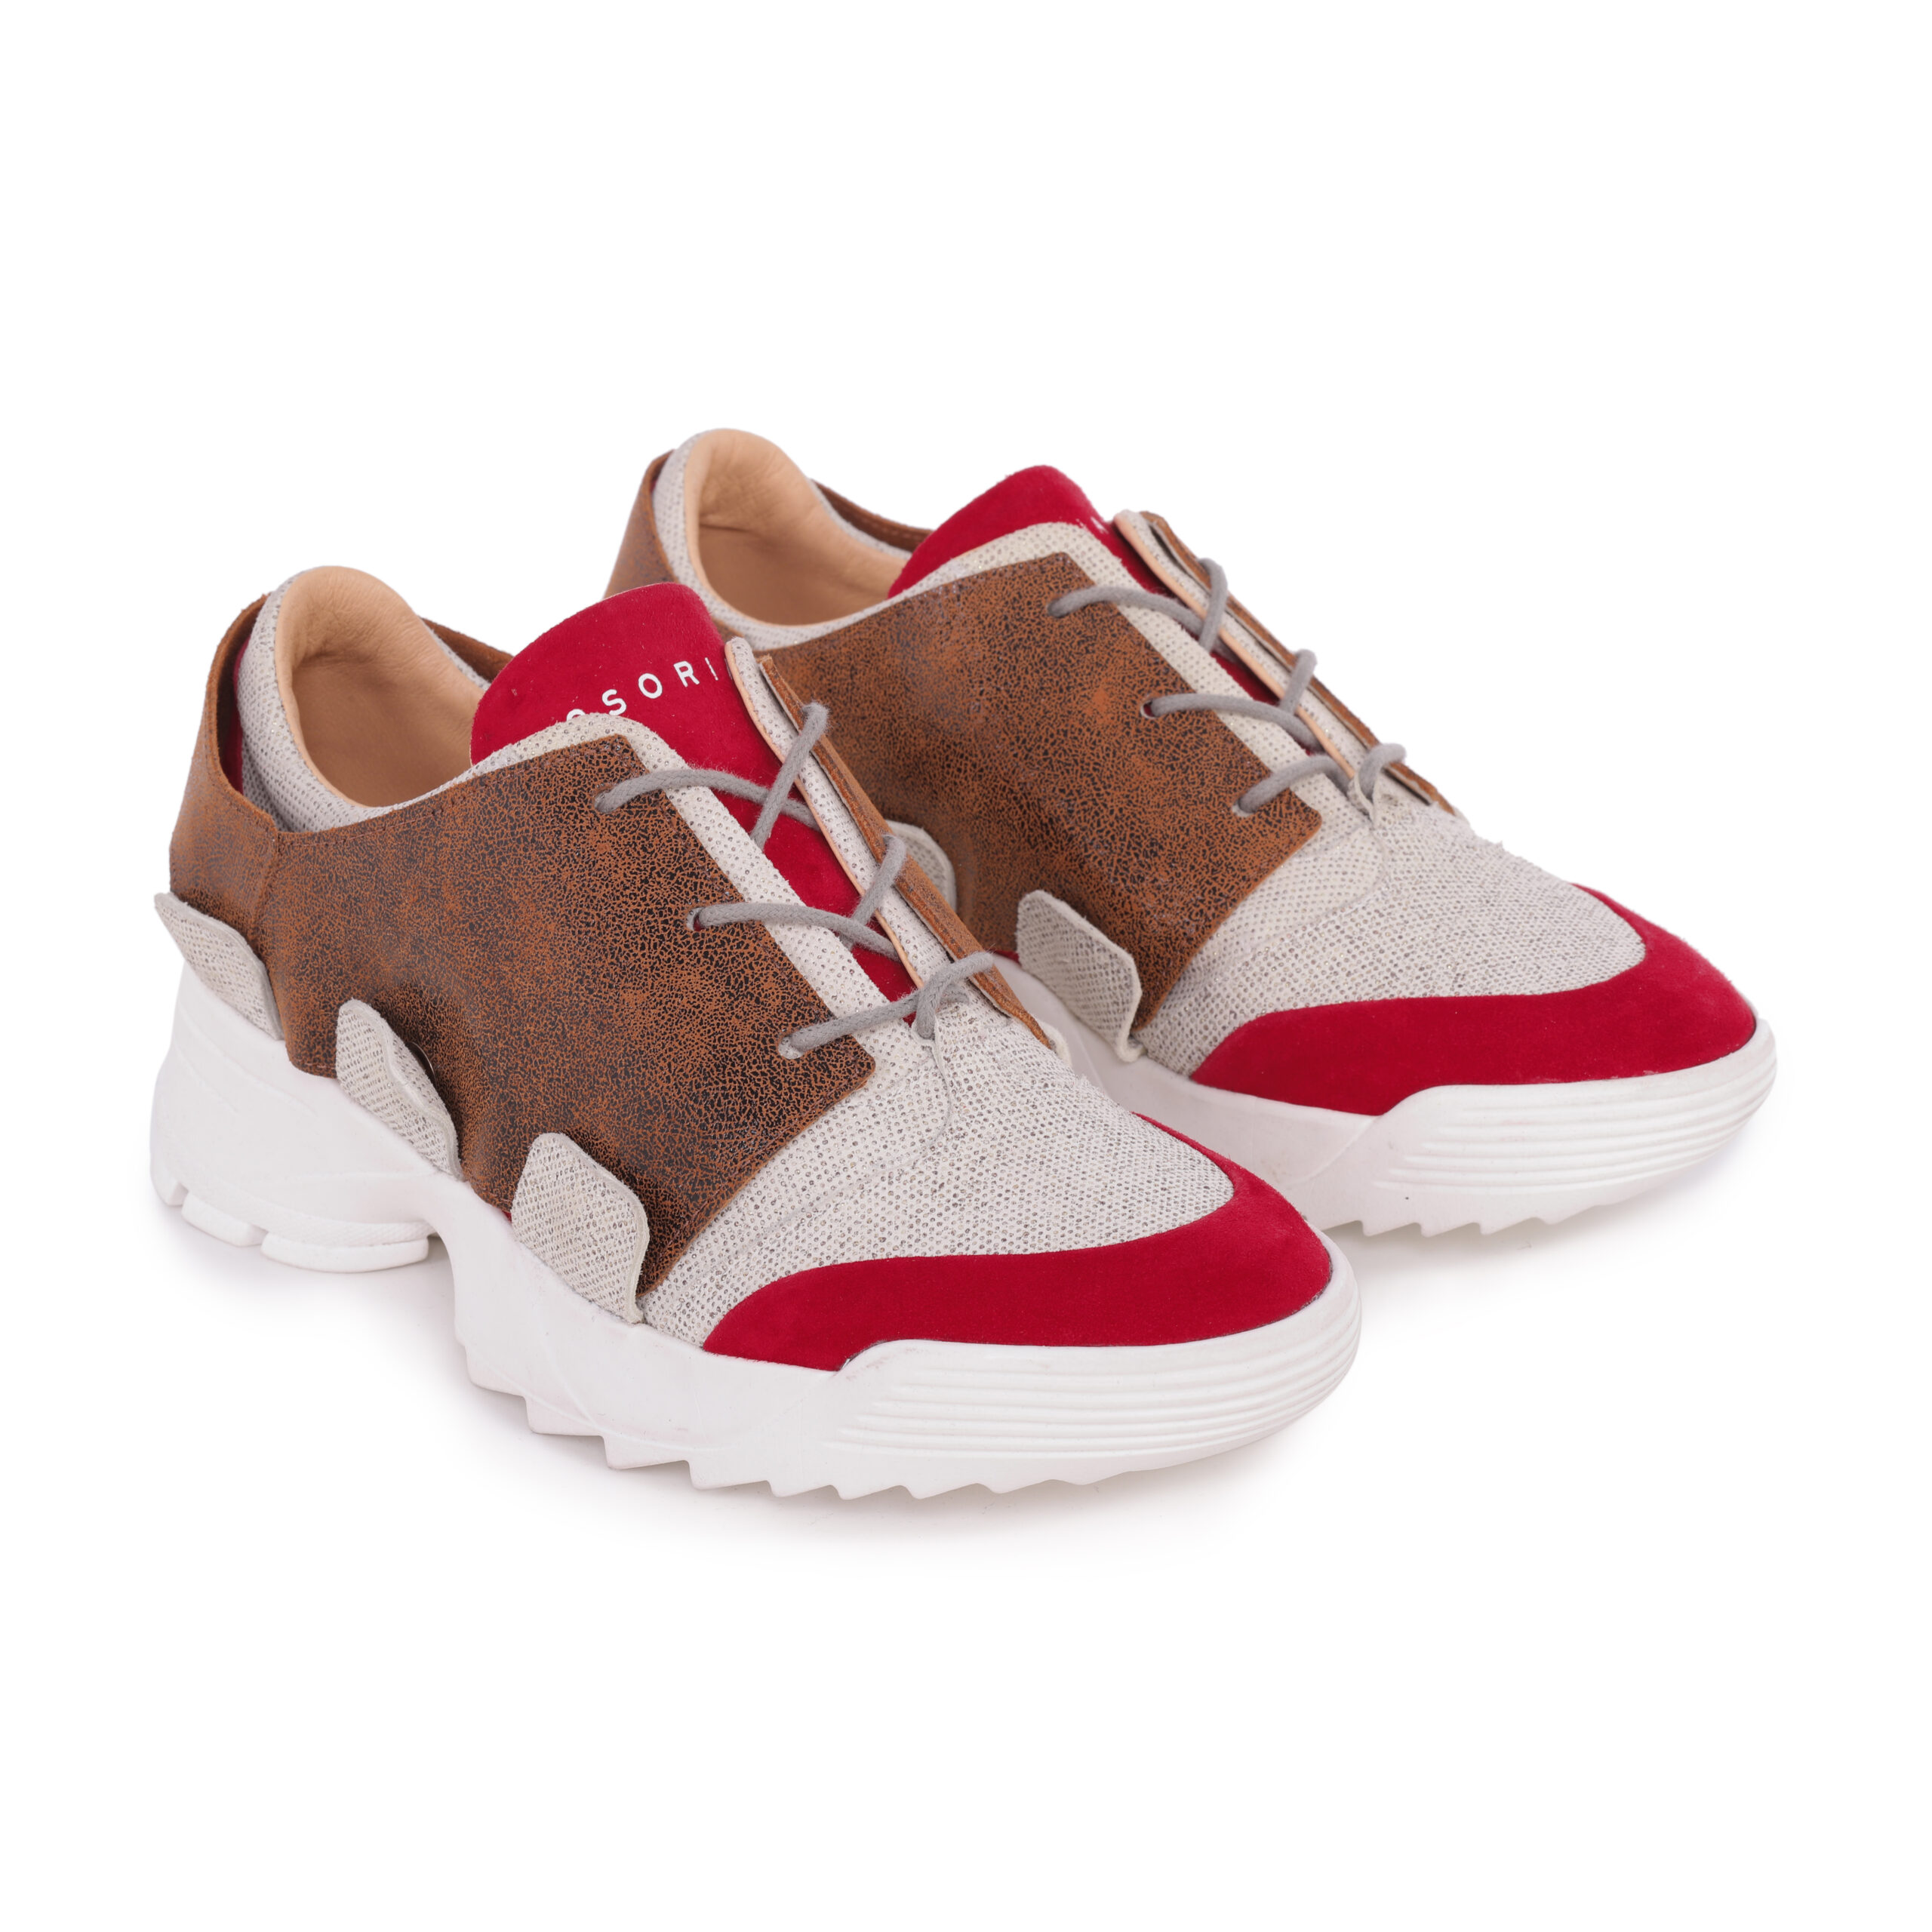 OSORIATI - Modèle de sneackers rouge - avec saddle marron